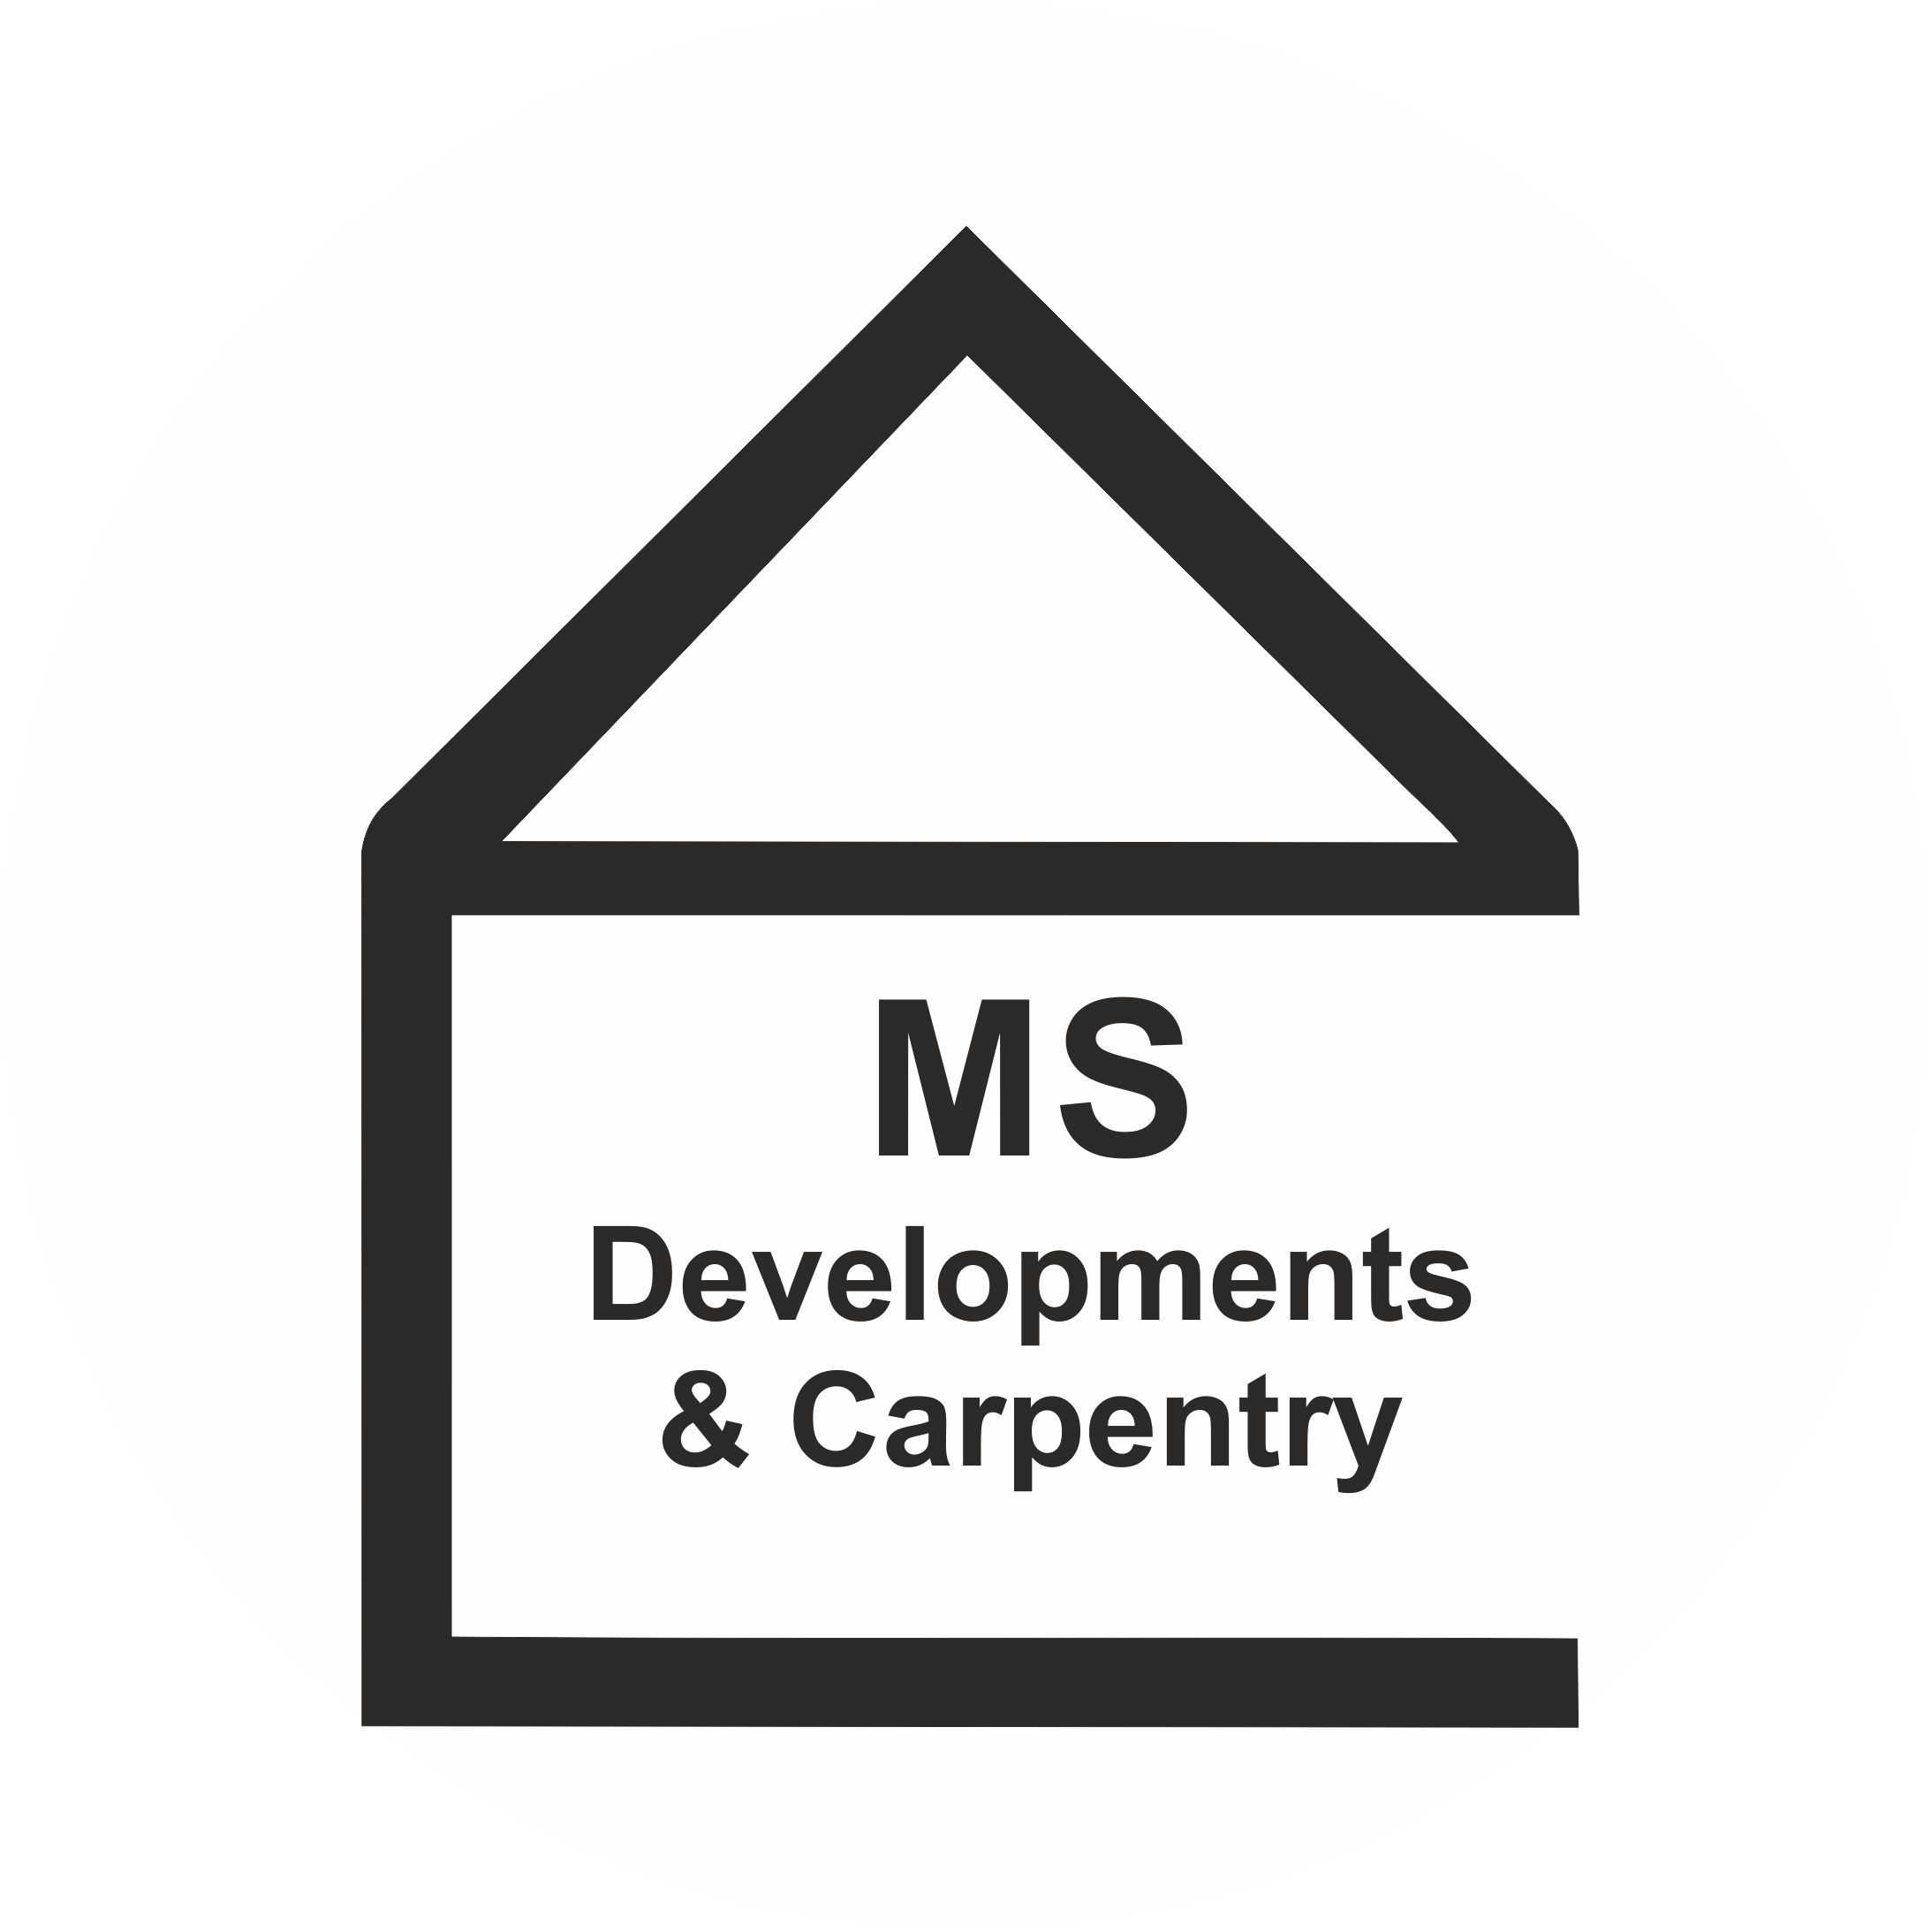 MS Developments & Carpentry